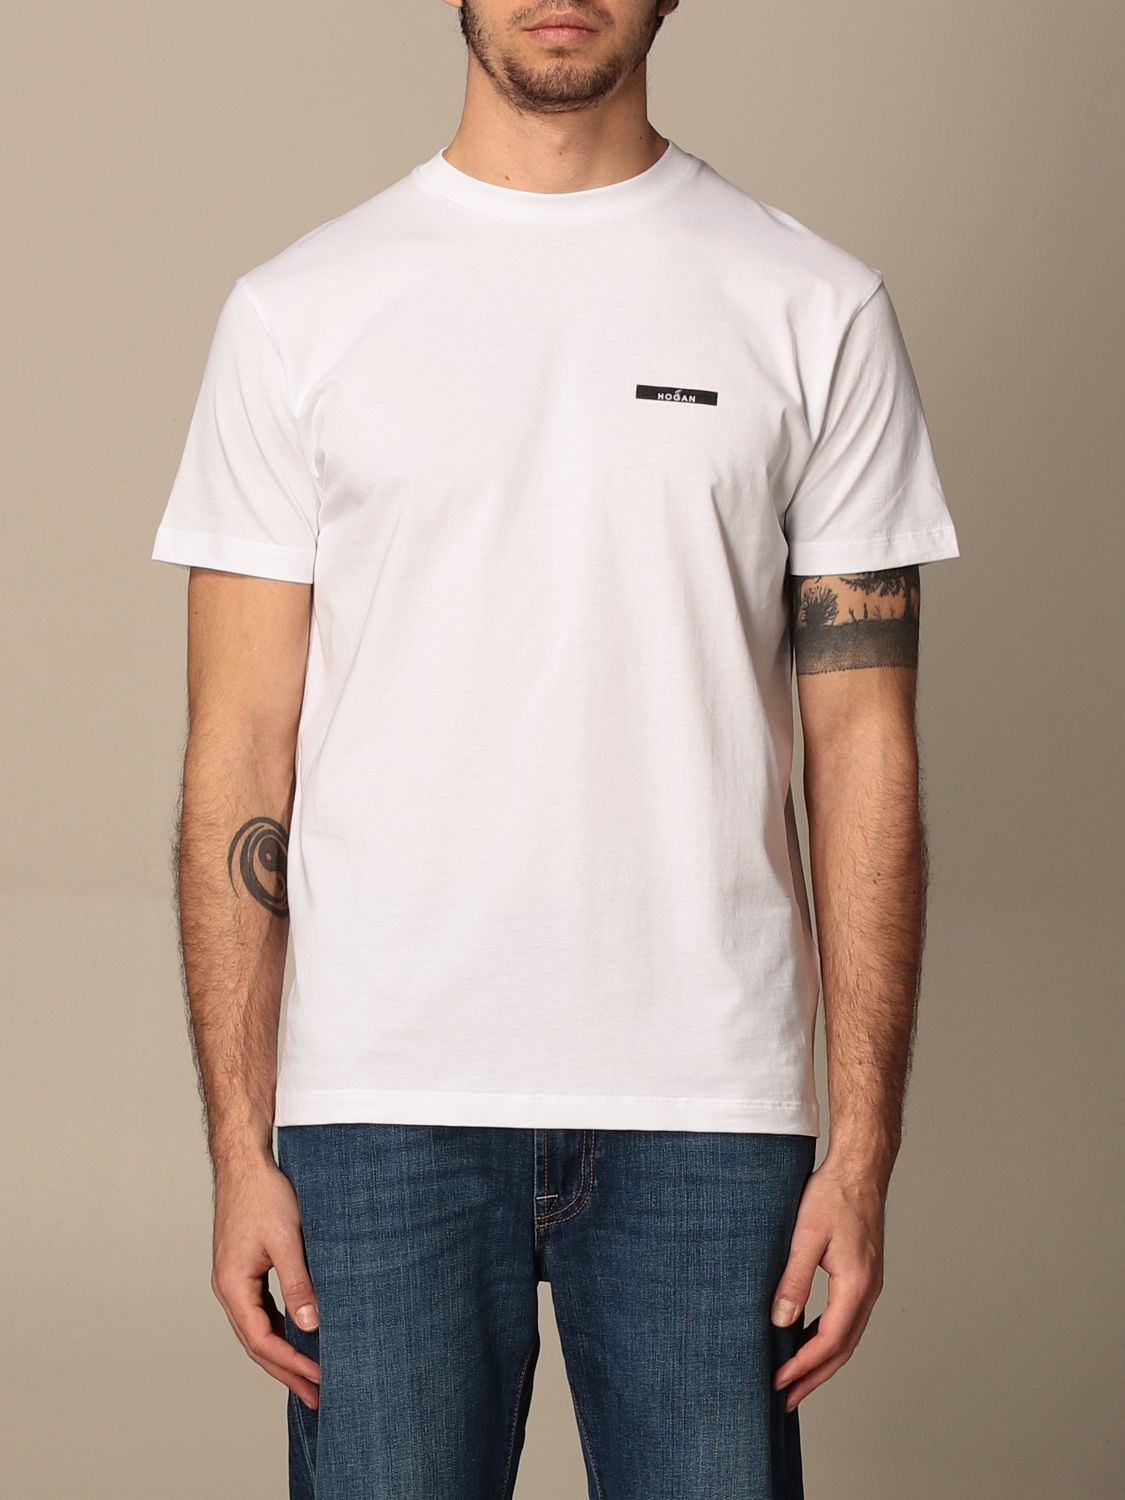 Hogan Outlet: cotton t-shirt with logo - White | Hogan t-shirt ...